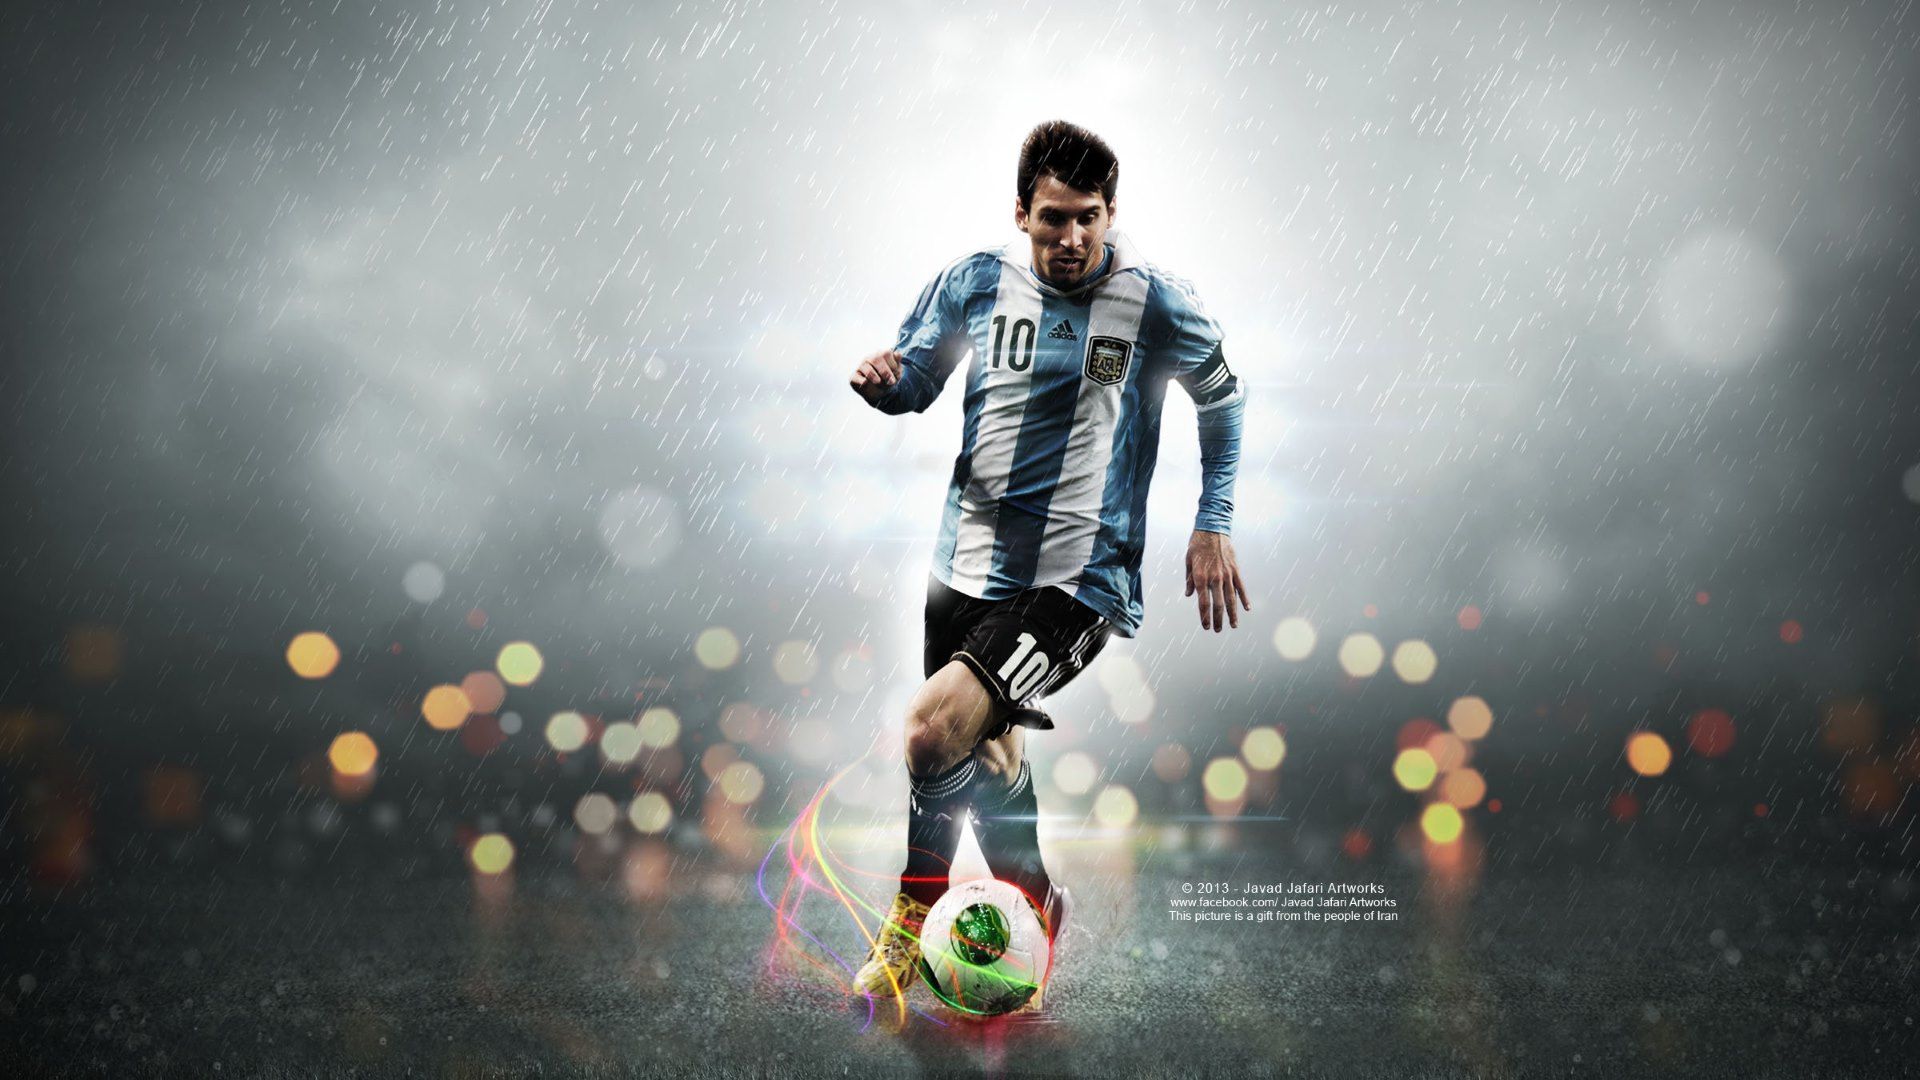 M10 Lionel Messi Wallpaper HD Free Download for Desktop